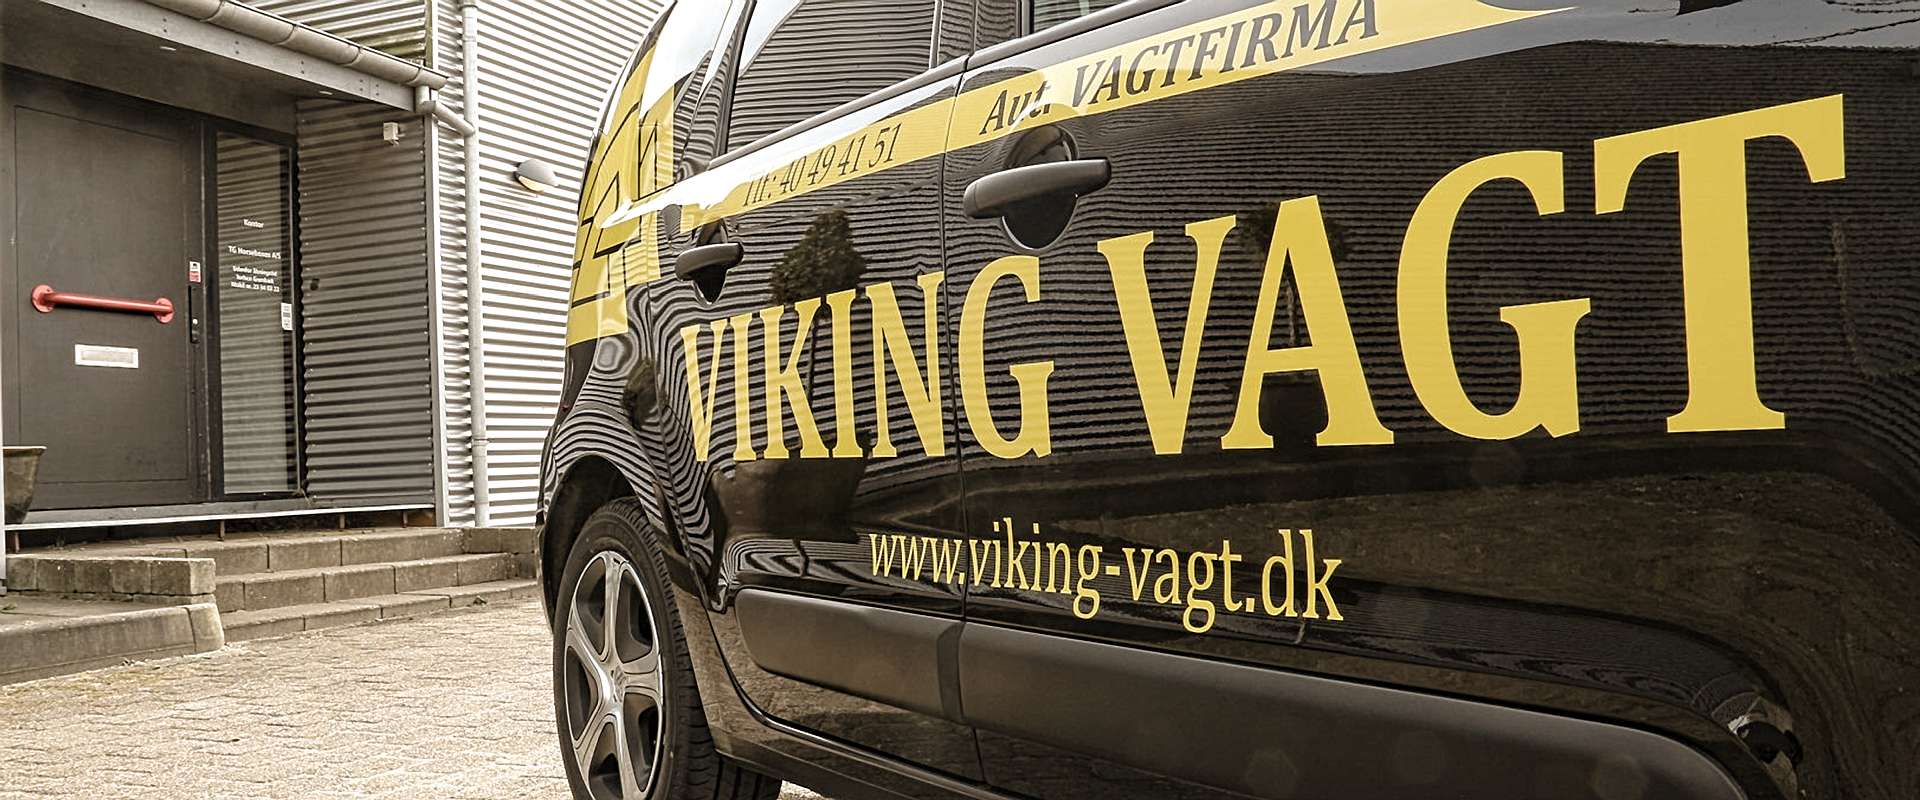 Viking-vagt-firma-28 copy.jpg